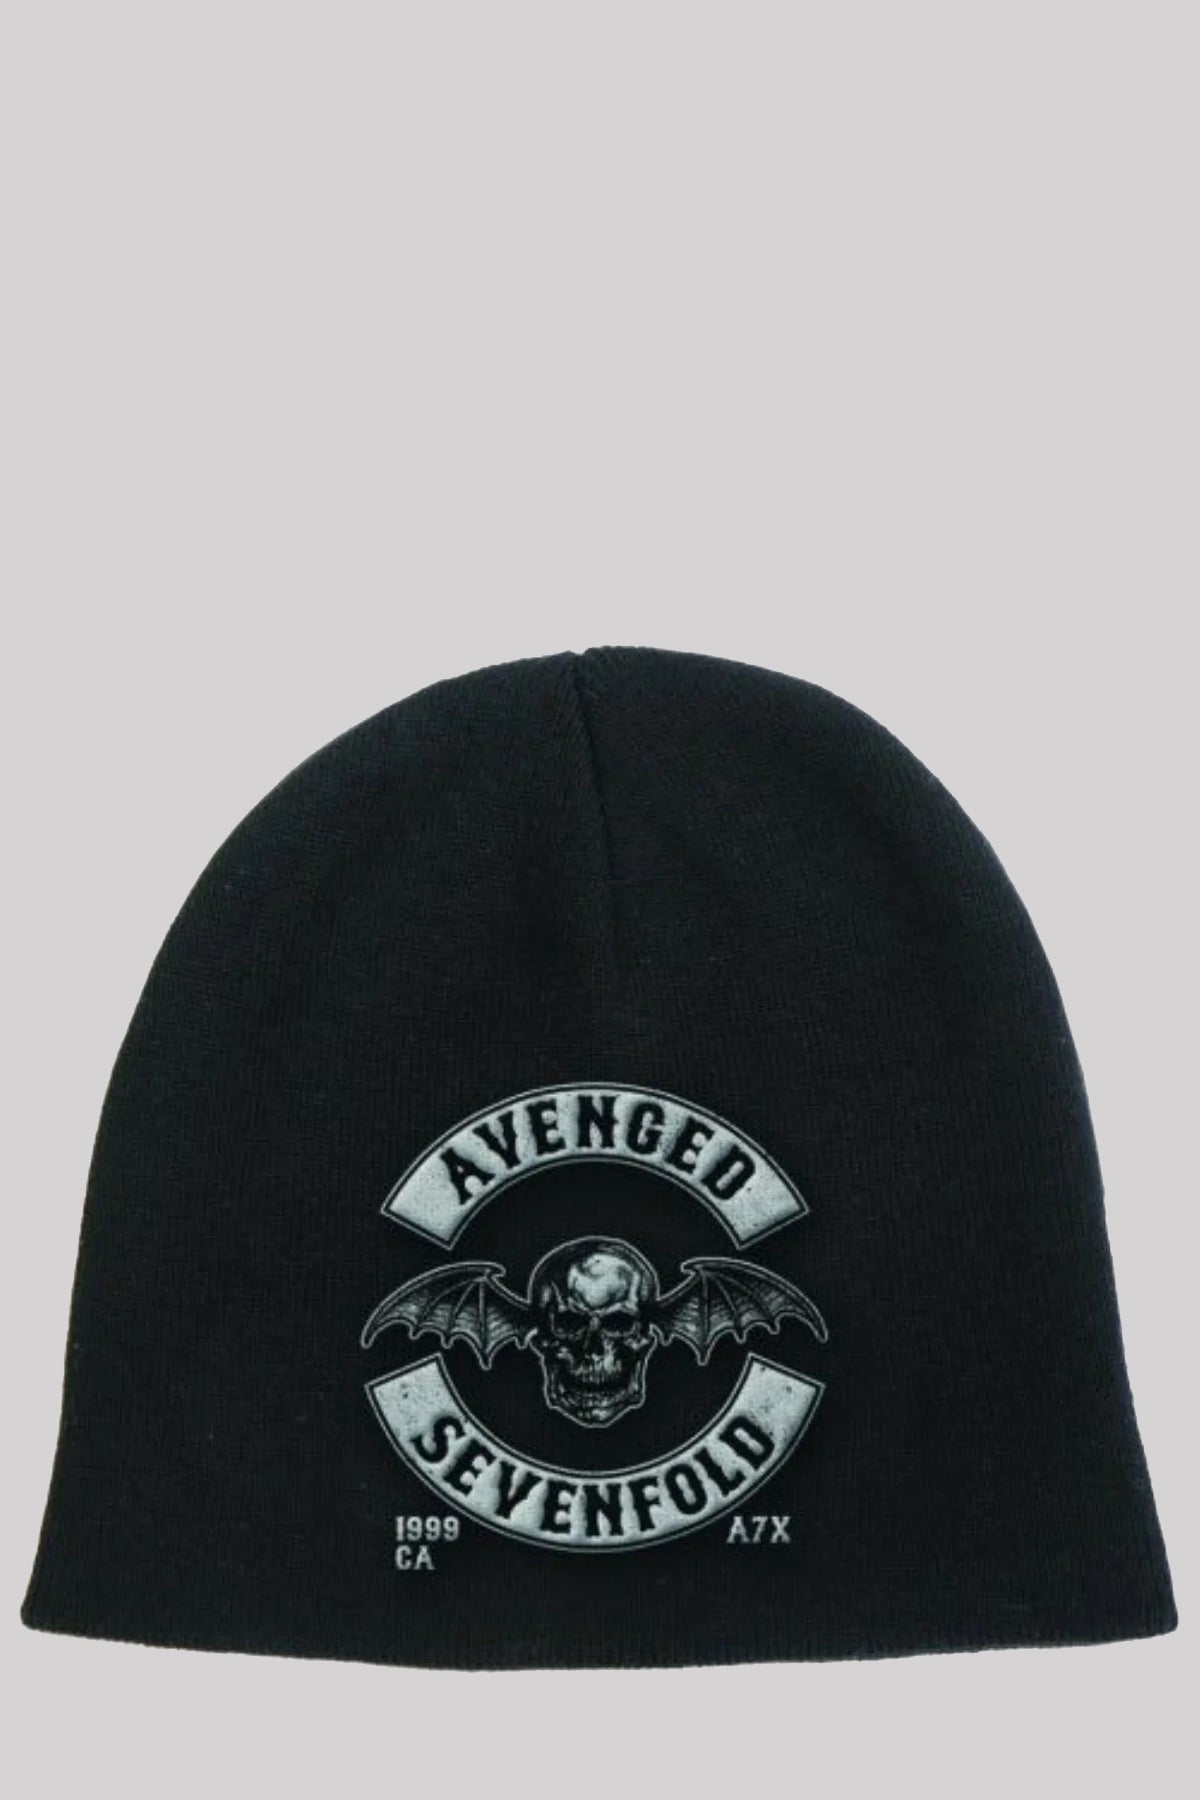 Avenged Sevenfold Unisex Beanie Hat: Death Bat Crest